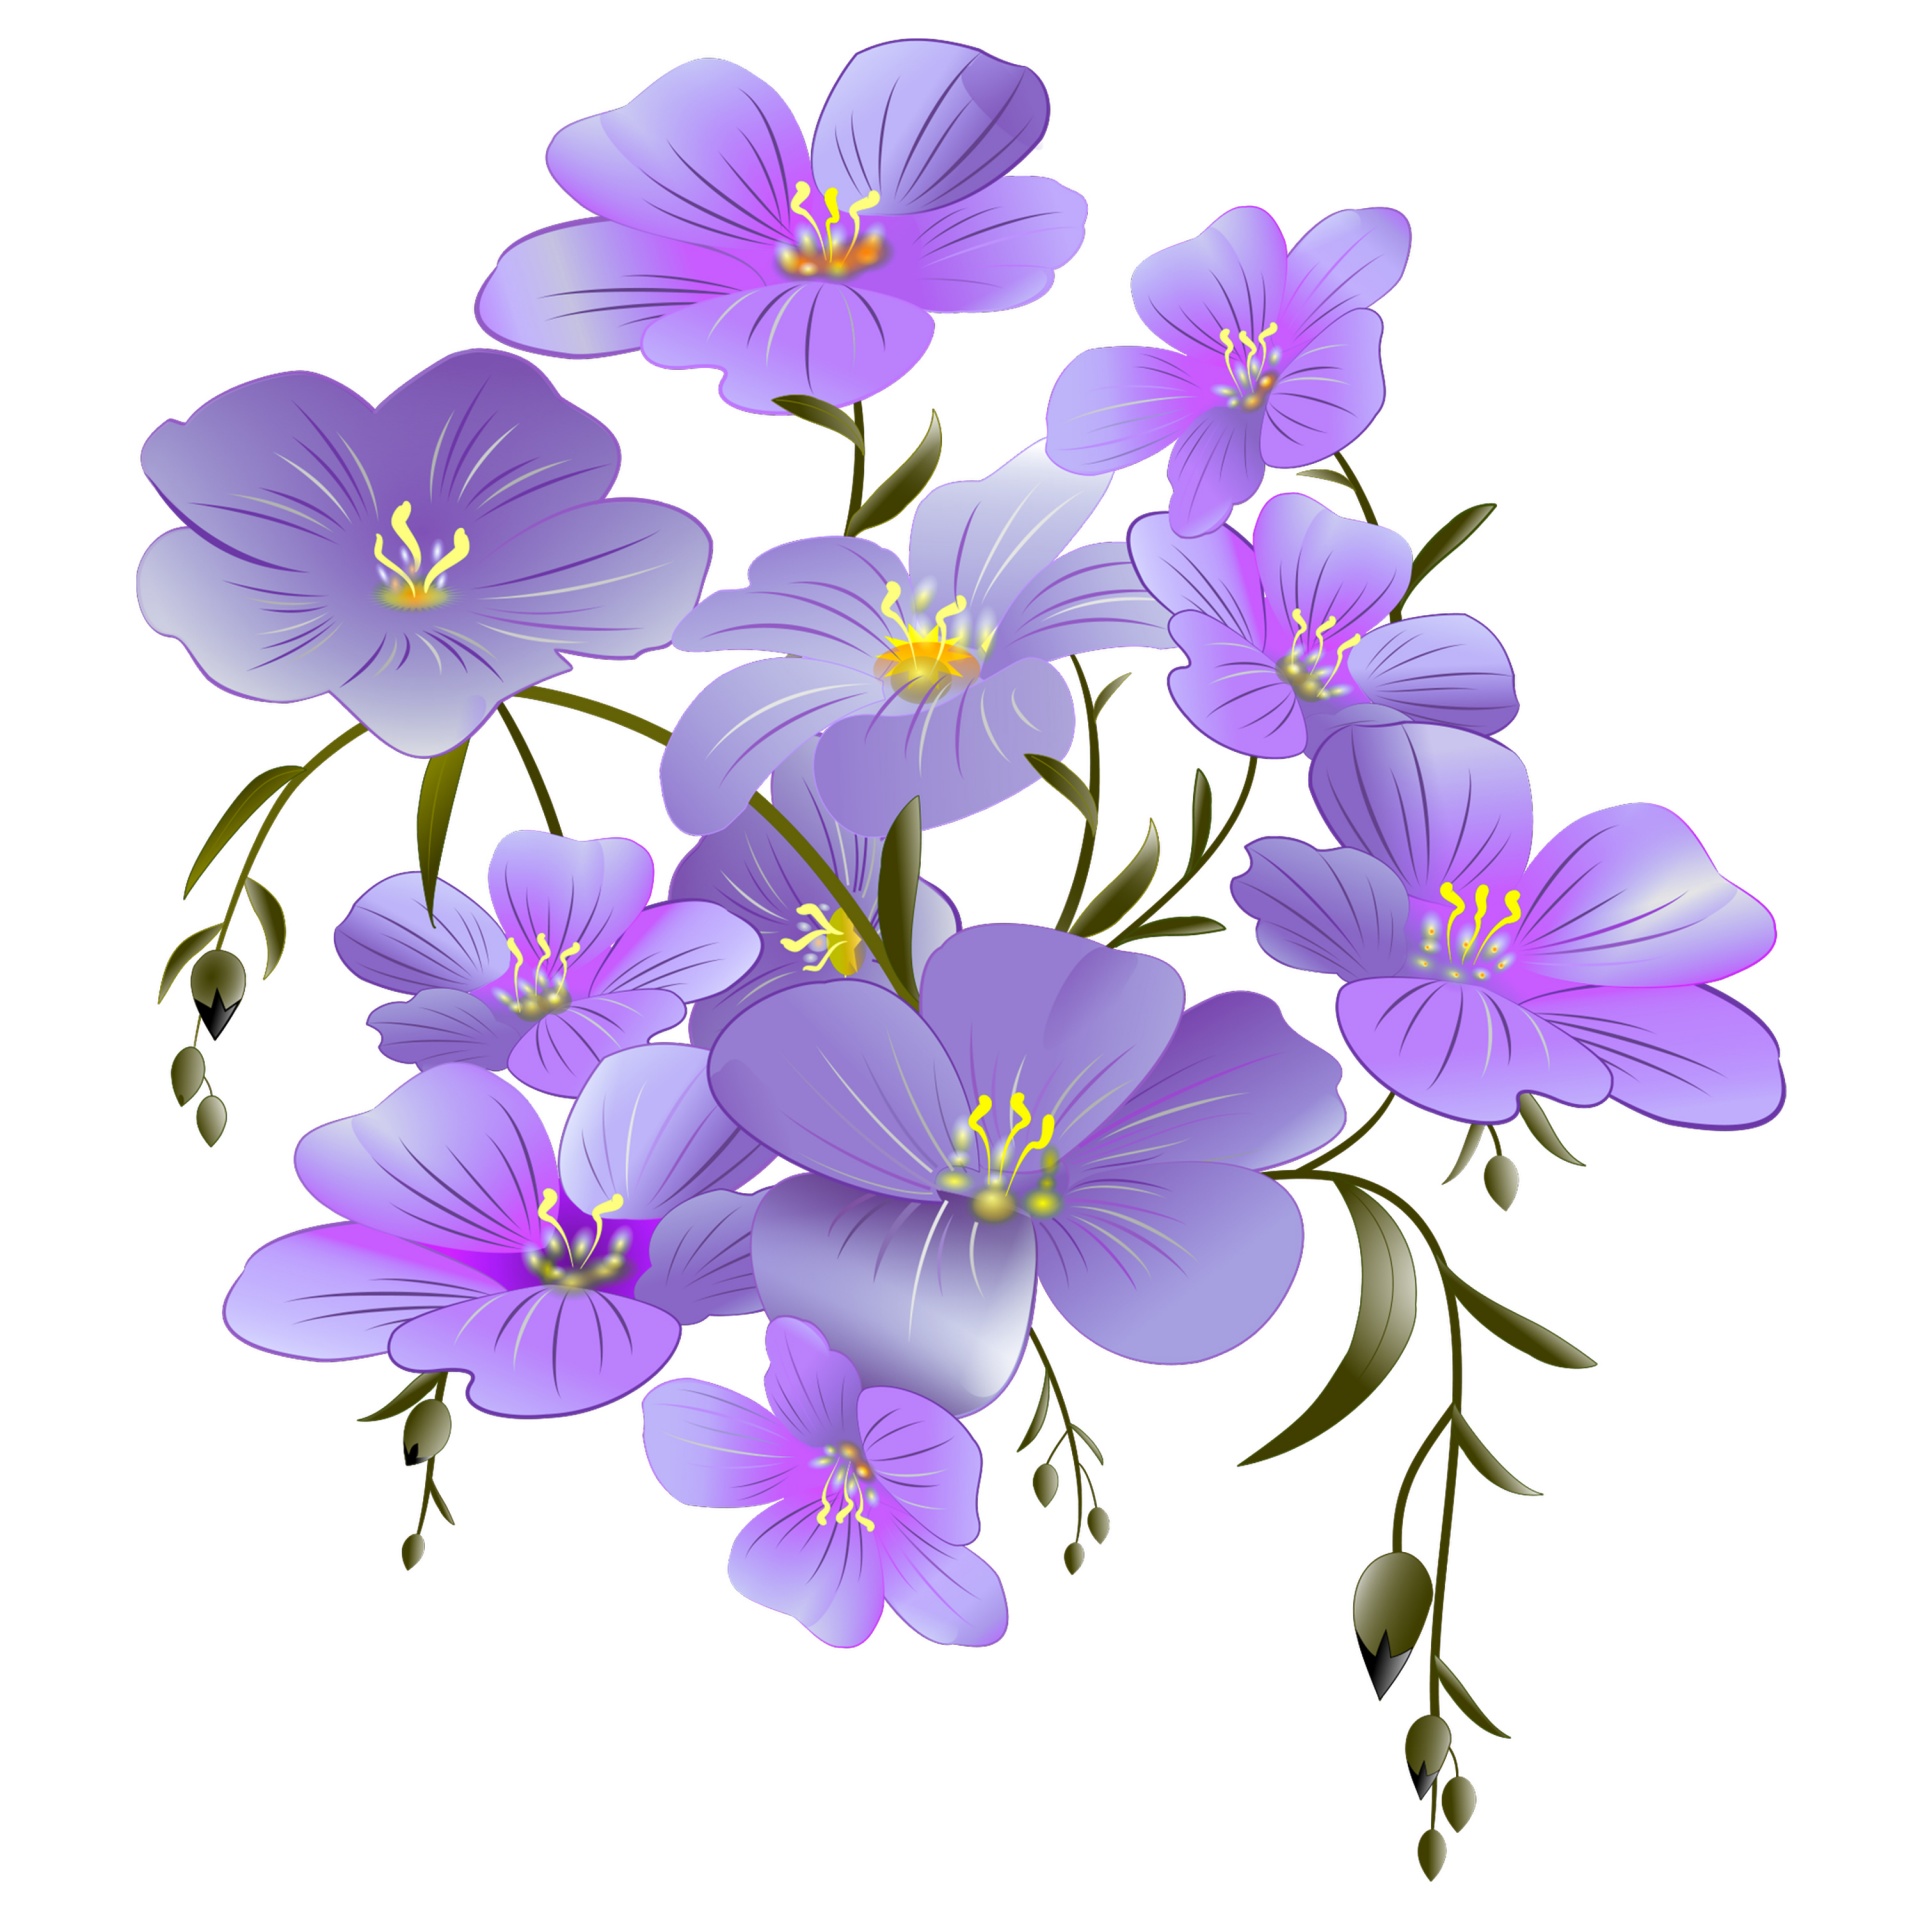 Flowers Clipart Purple Free Stock Photo - Public Domain ...